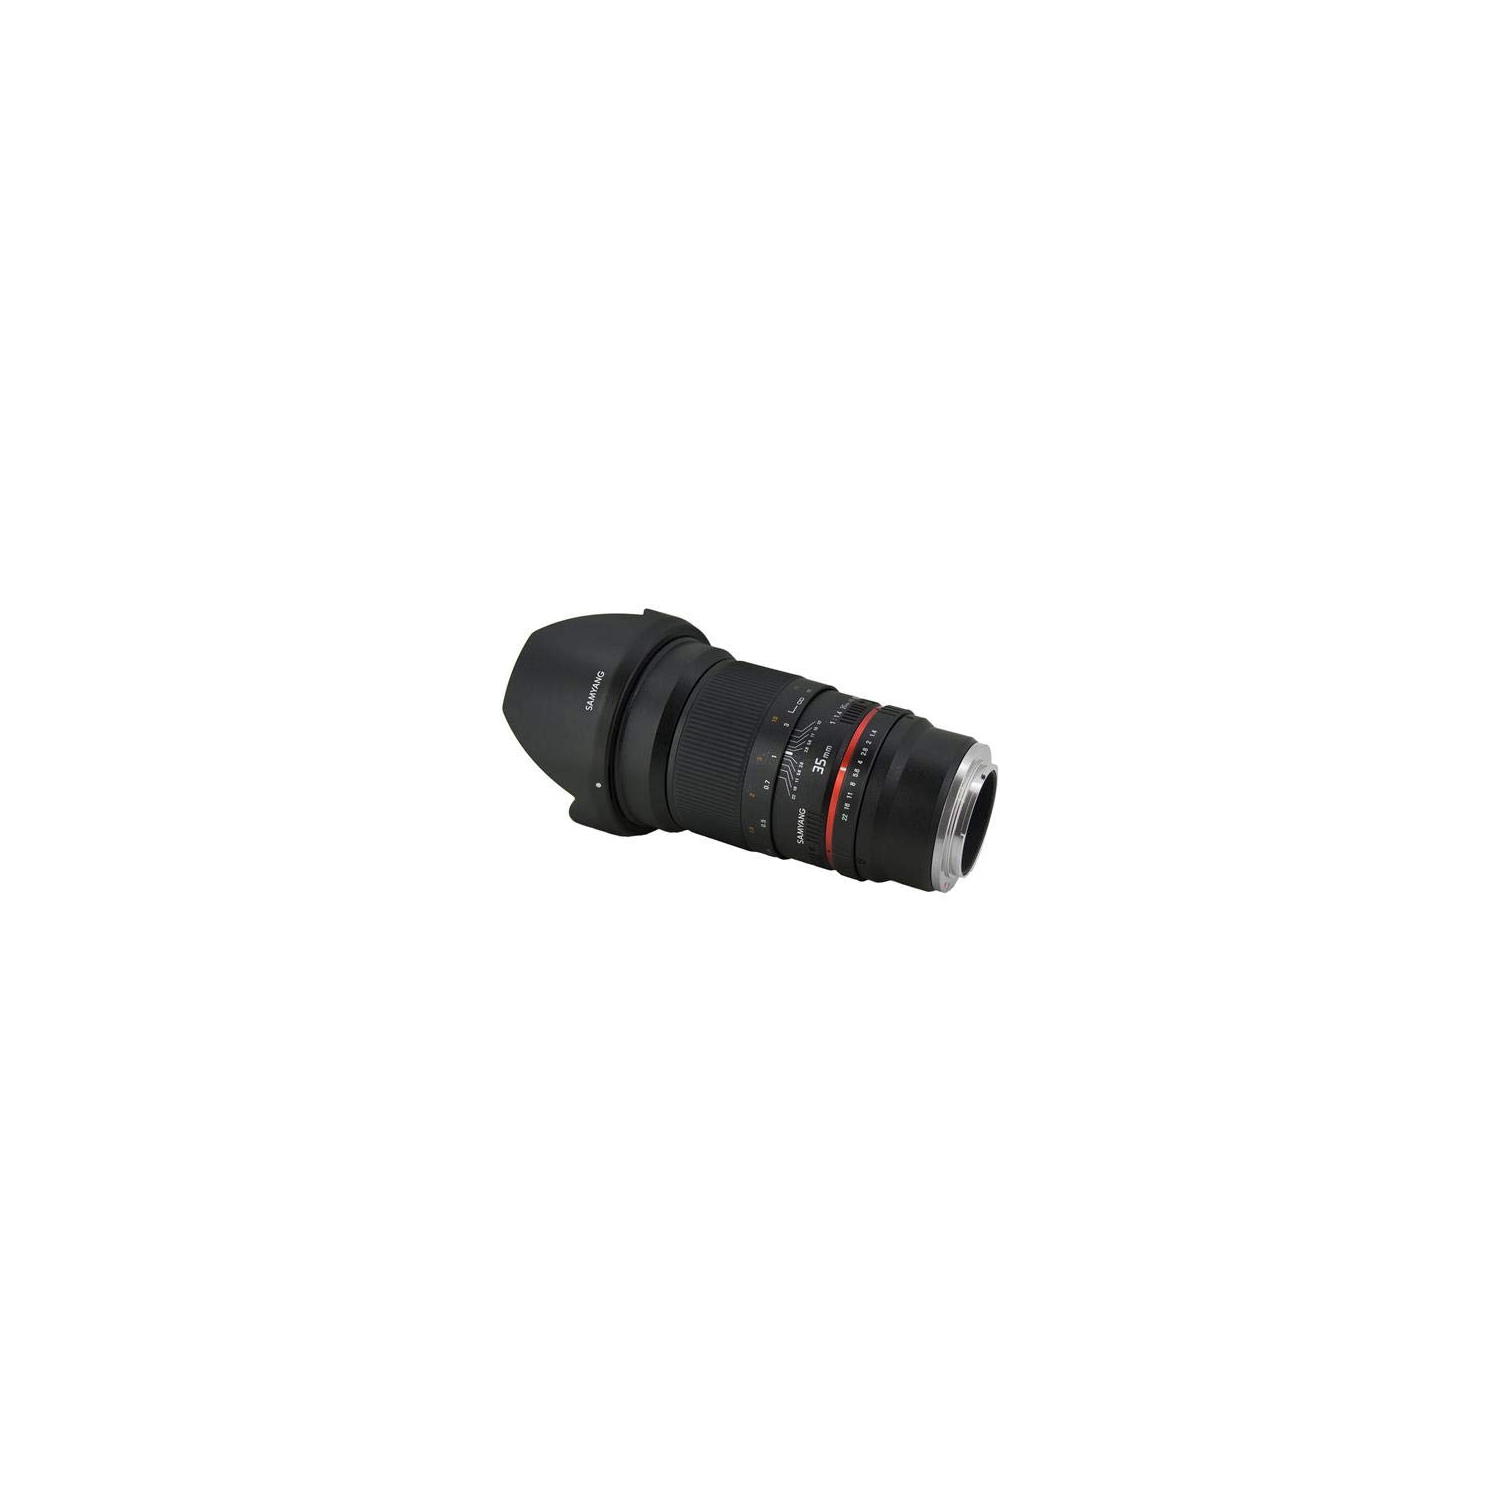 SAMYANG 35mm f/1.4 Manual Focus Lens for Sony E-Mount Nex Series Cameras